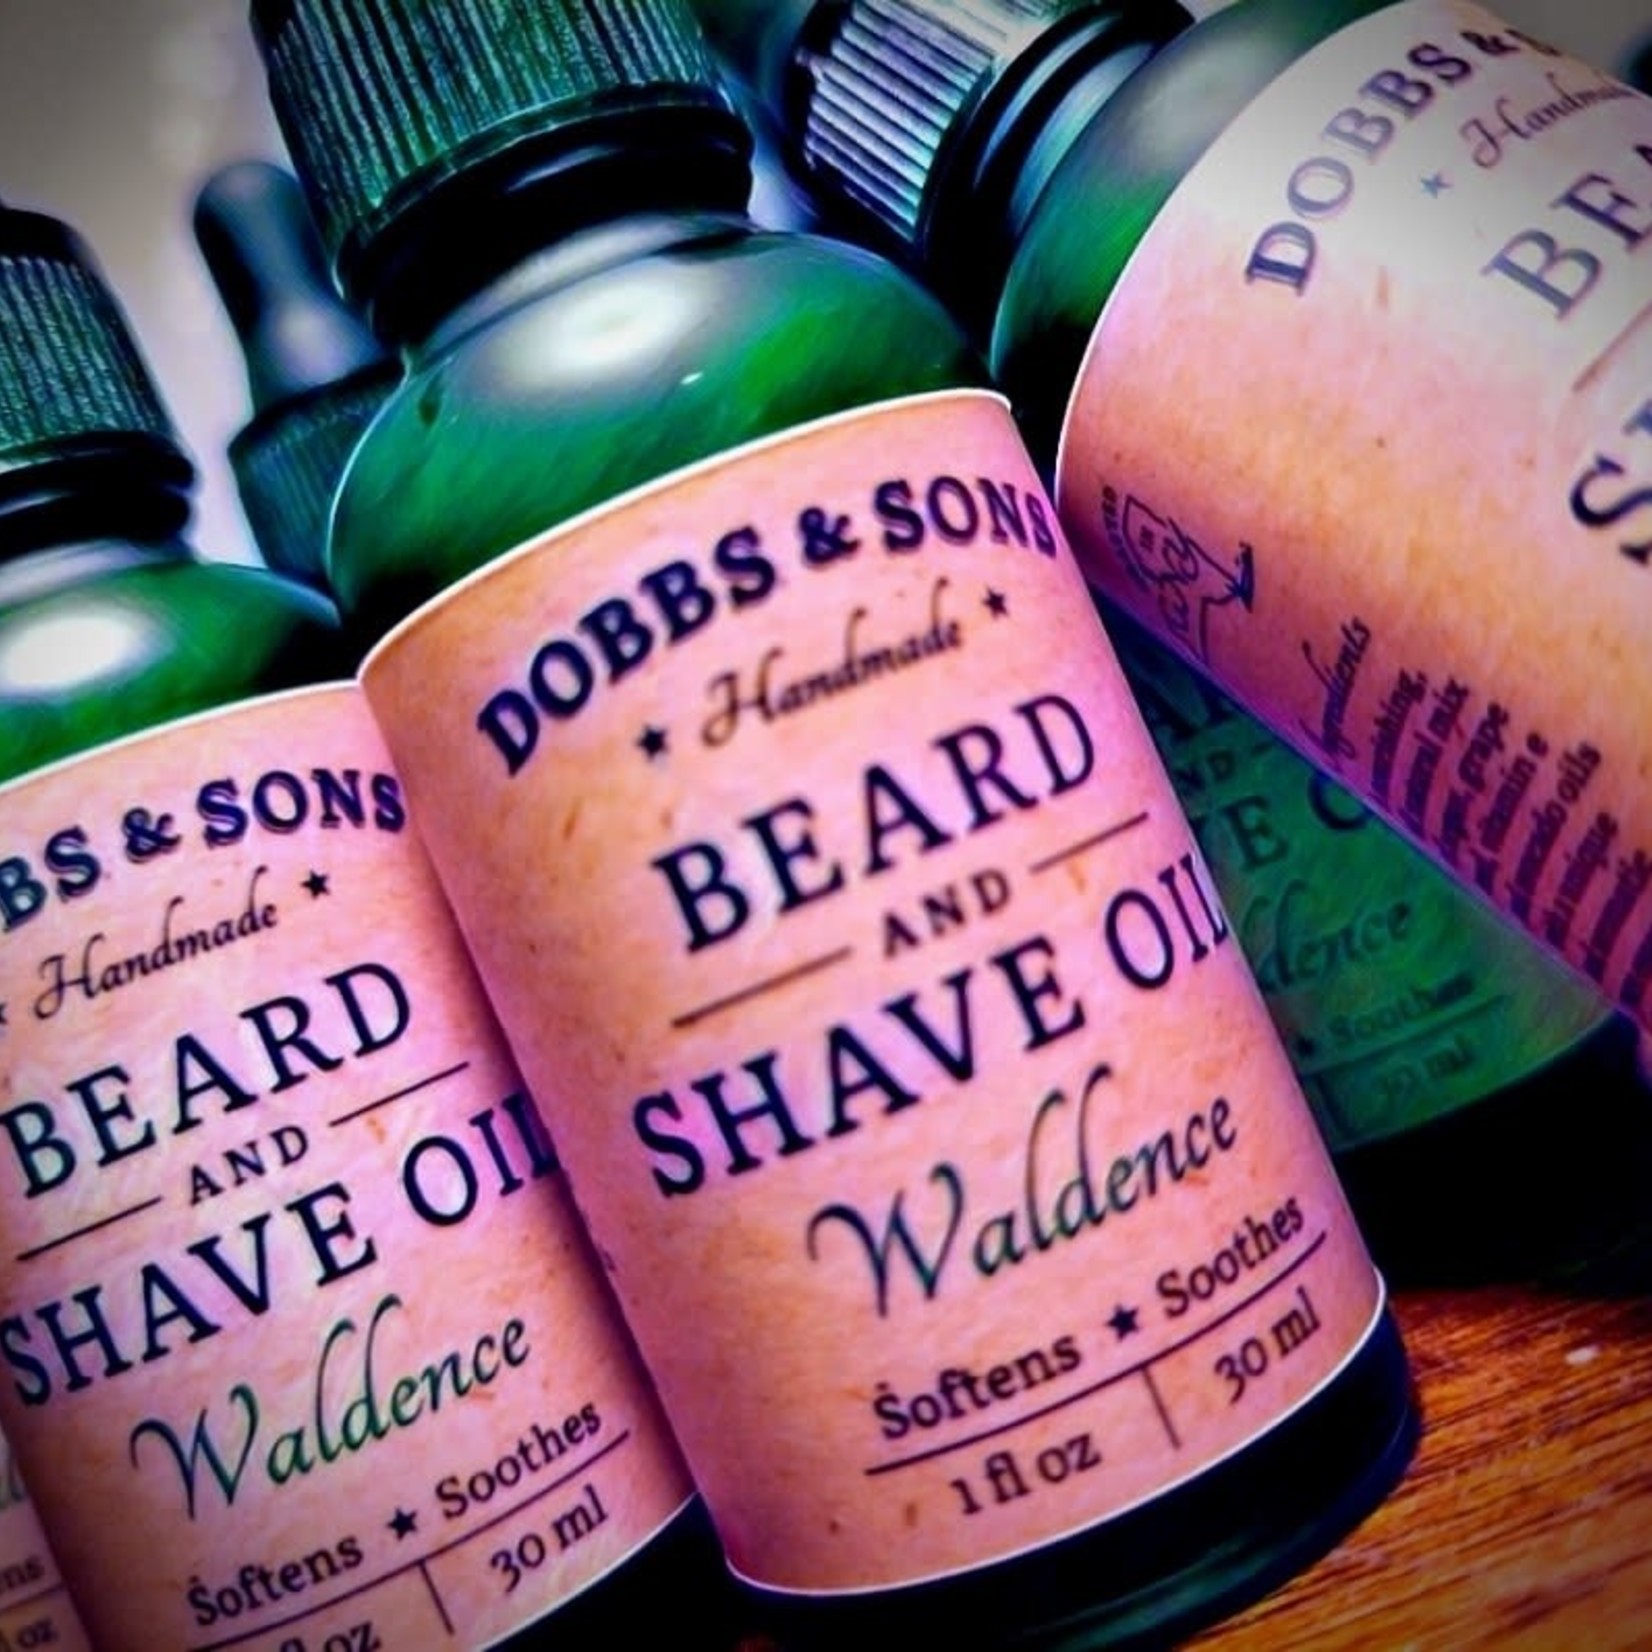 Barber Dobbs Dobbs & Sons Beard and Shave Oil